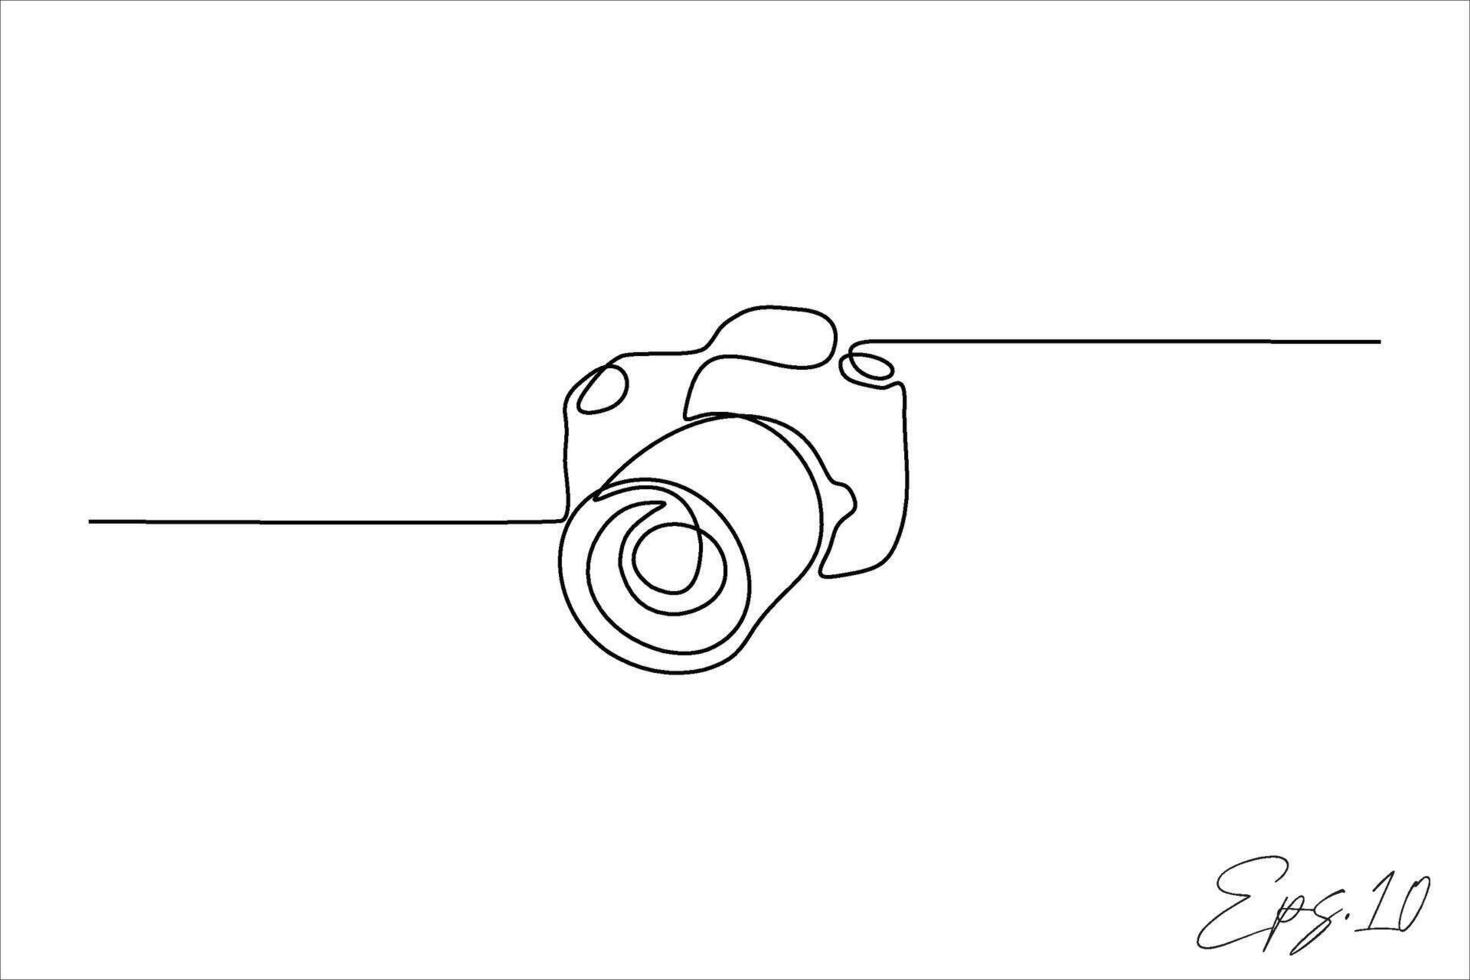 kontinuerlig linje konst teckning av kamera vektor